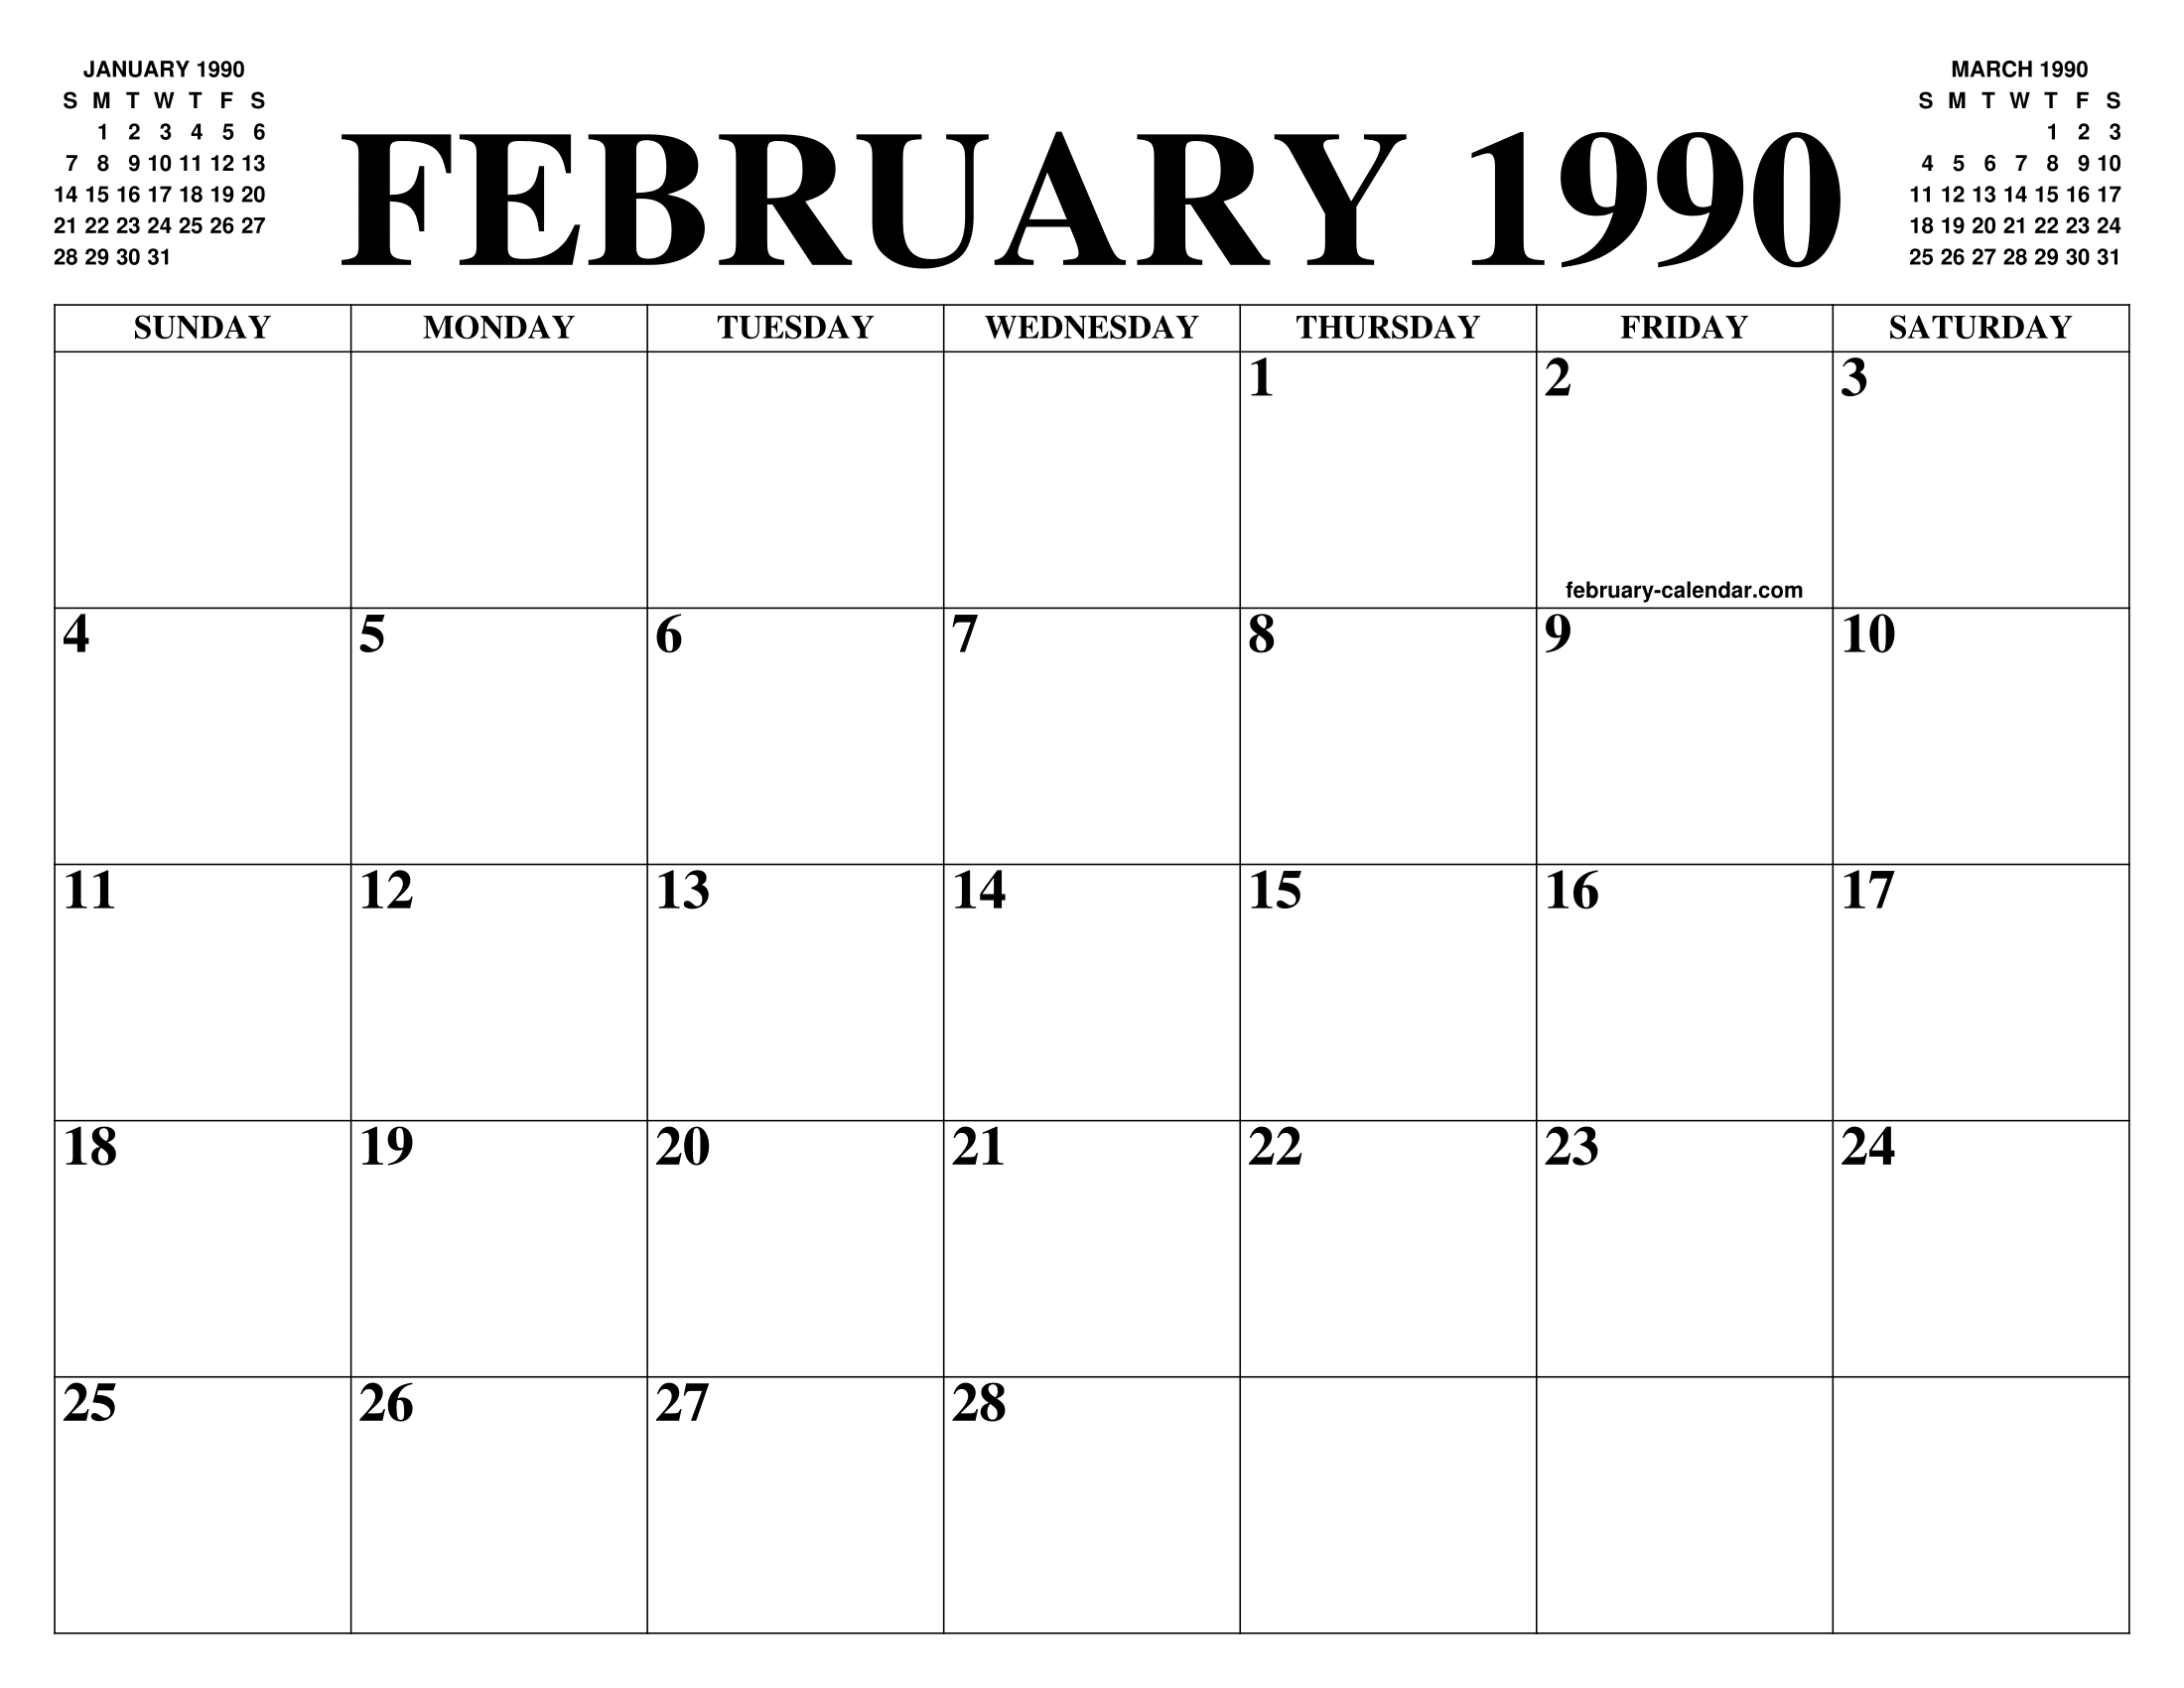 FEBRUARY 1990 CALENDAR OF THE MONTH FREE PRINTABLE FEBRUARY CALENDAR